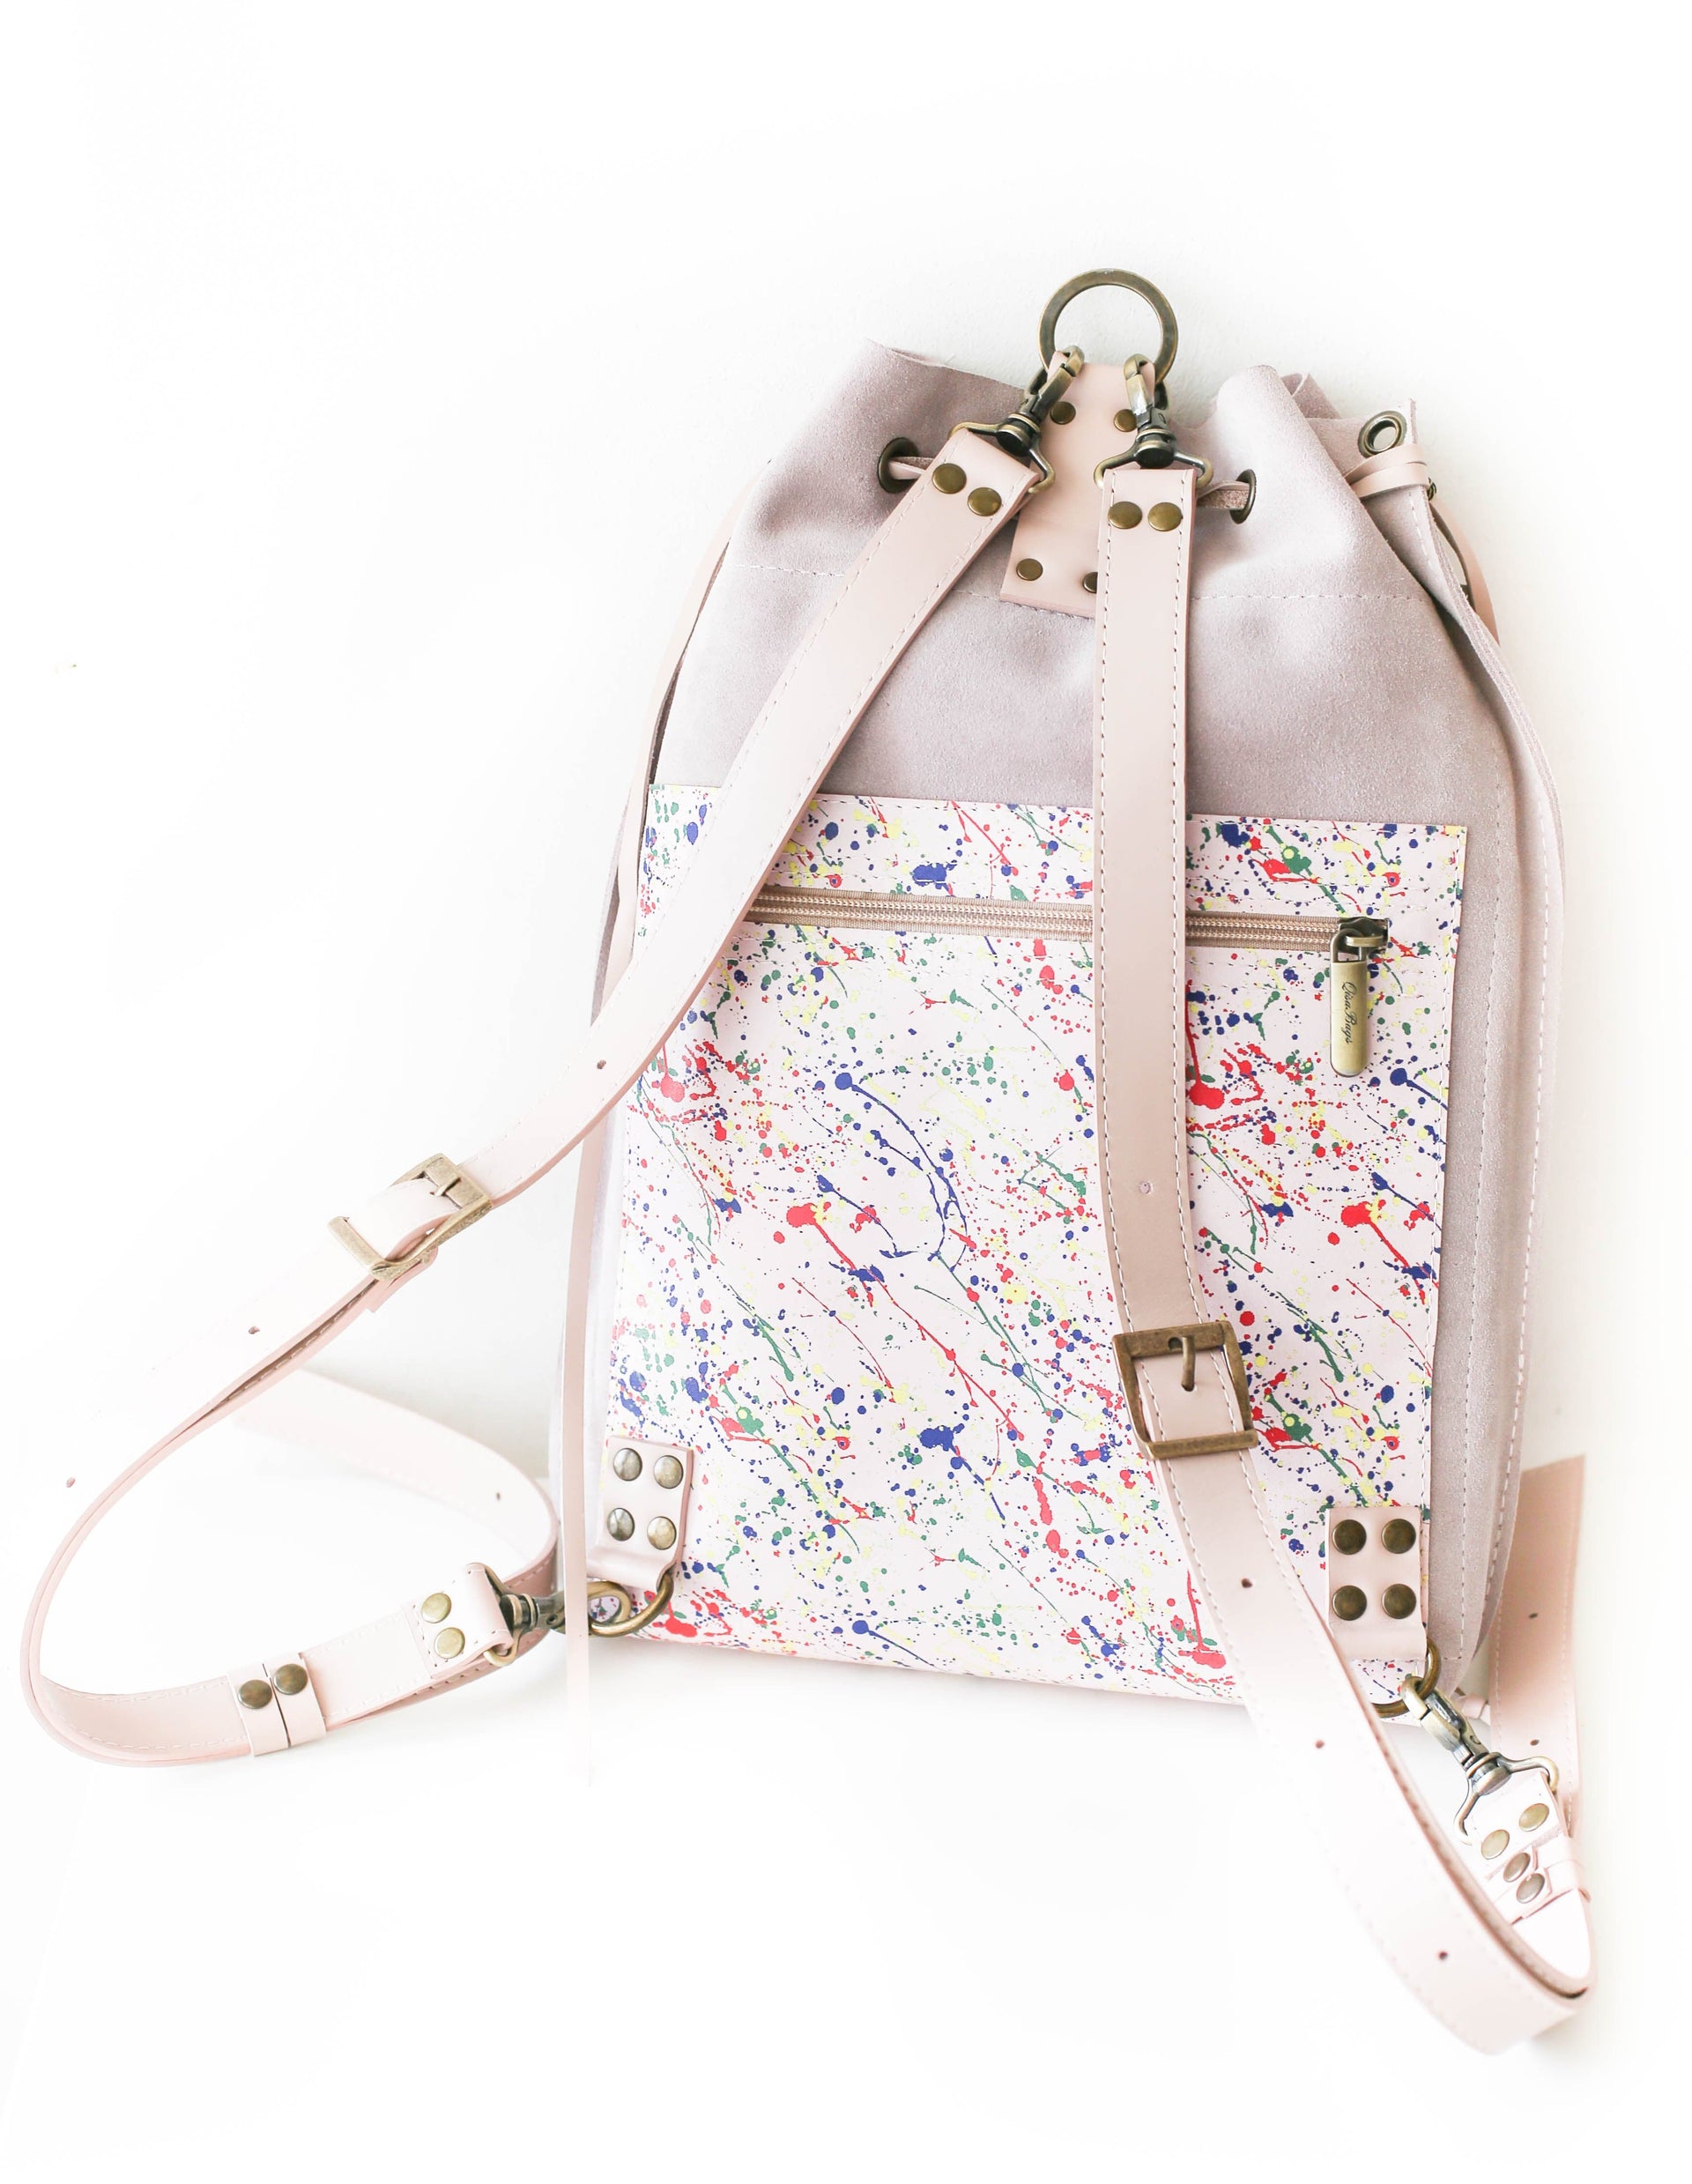 luxury backpack purse